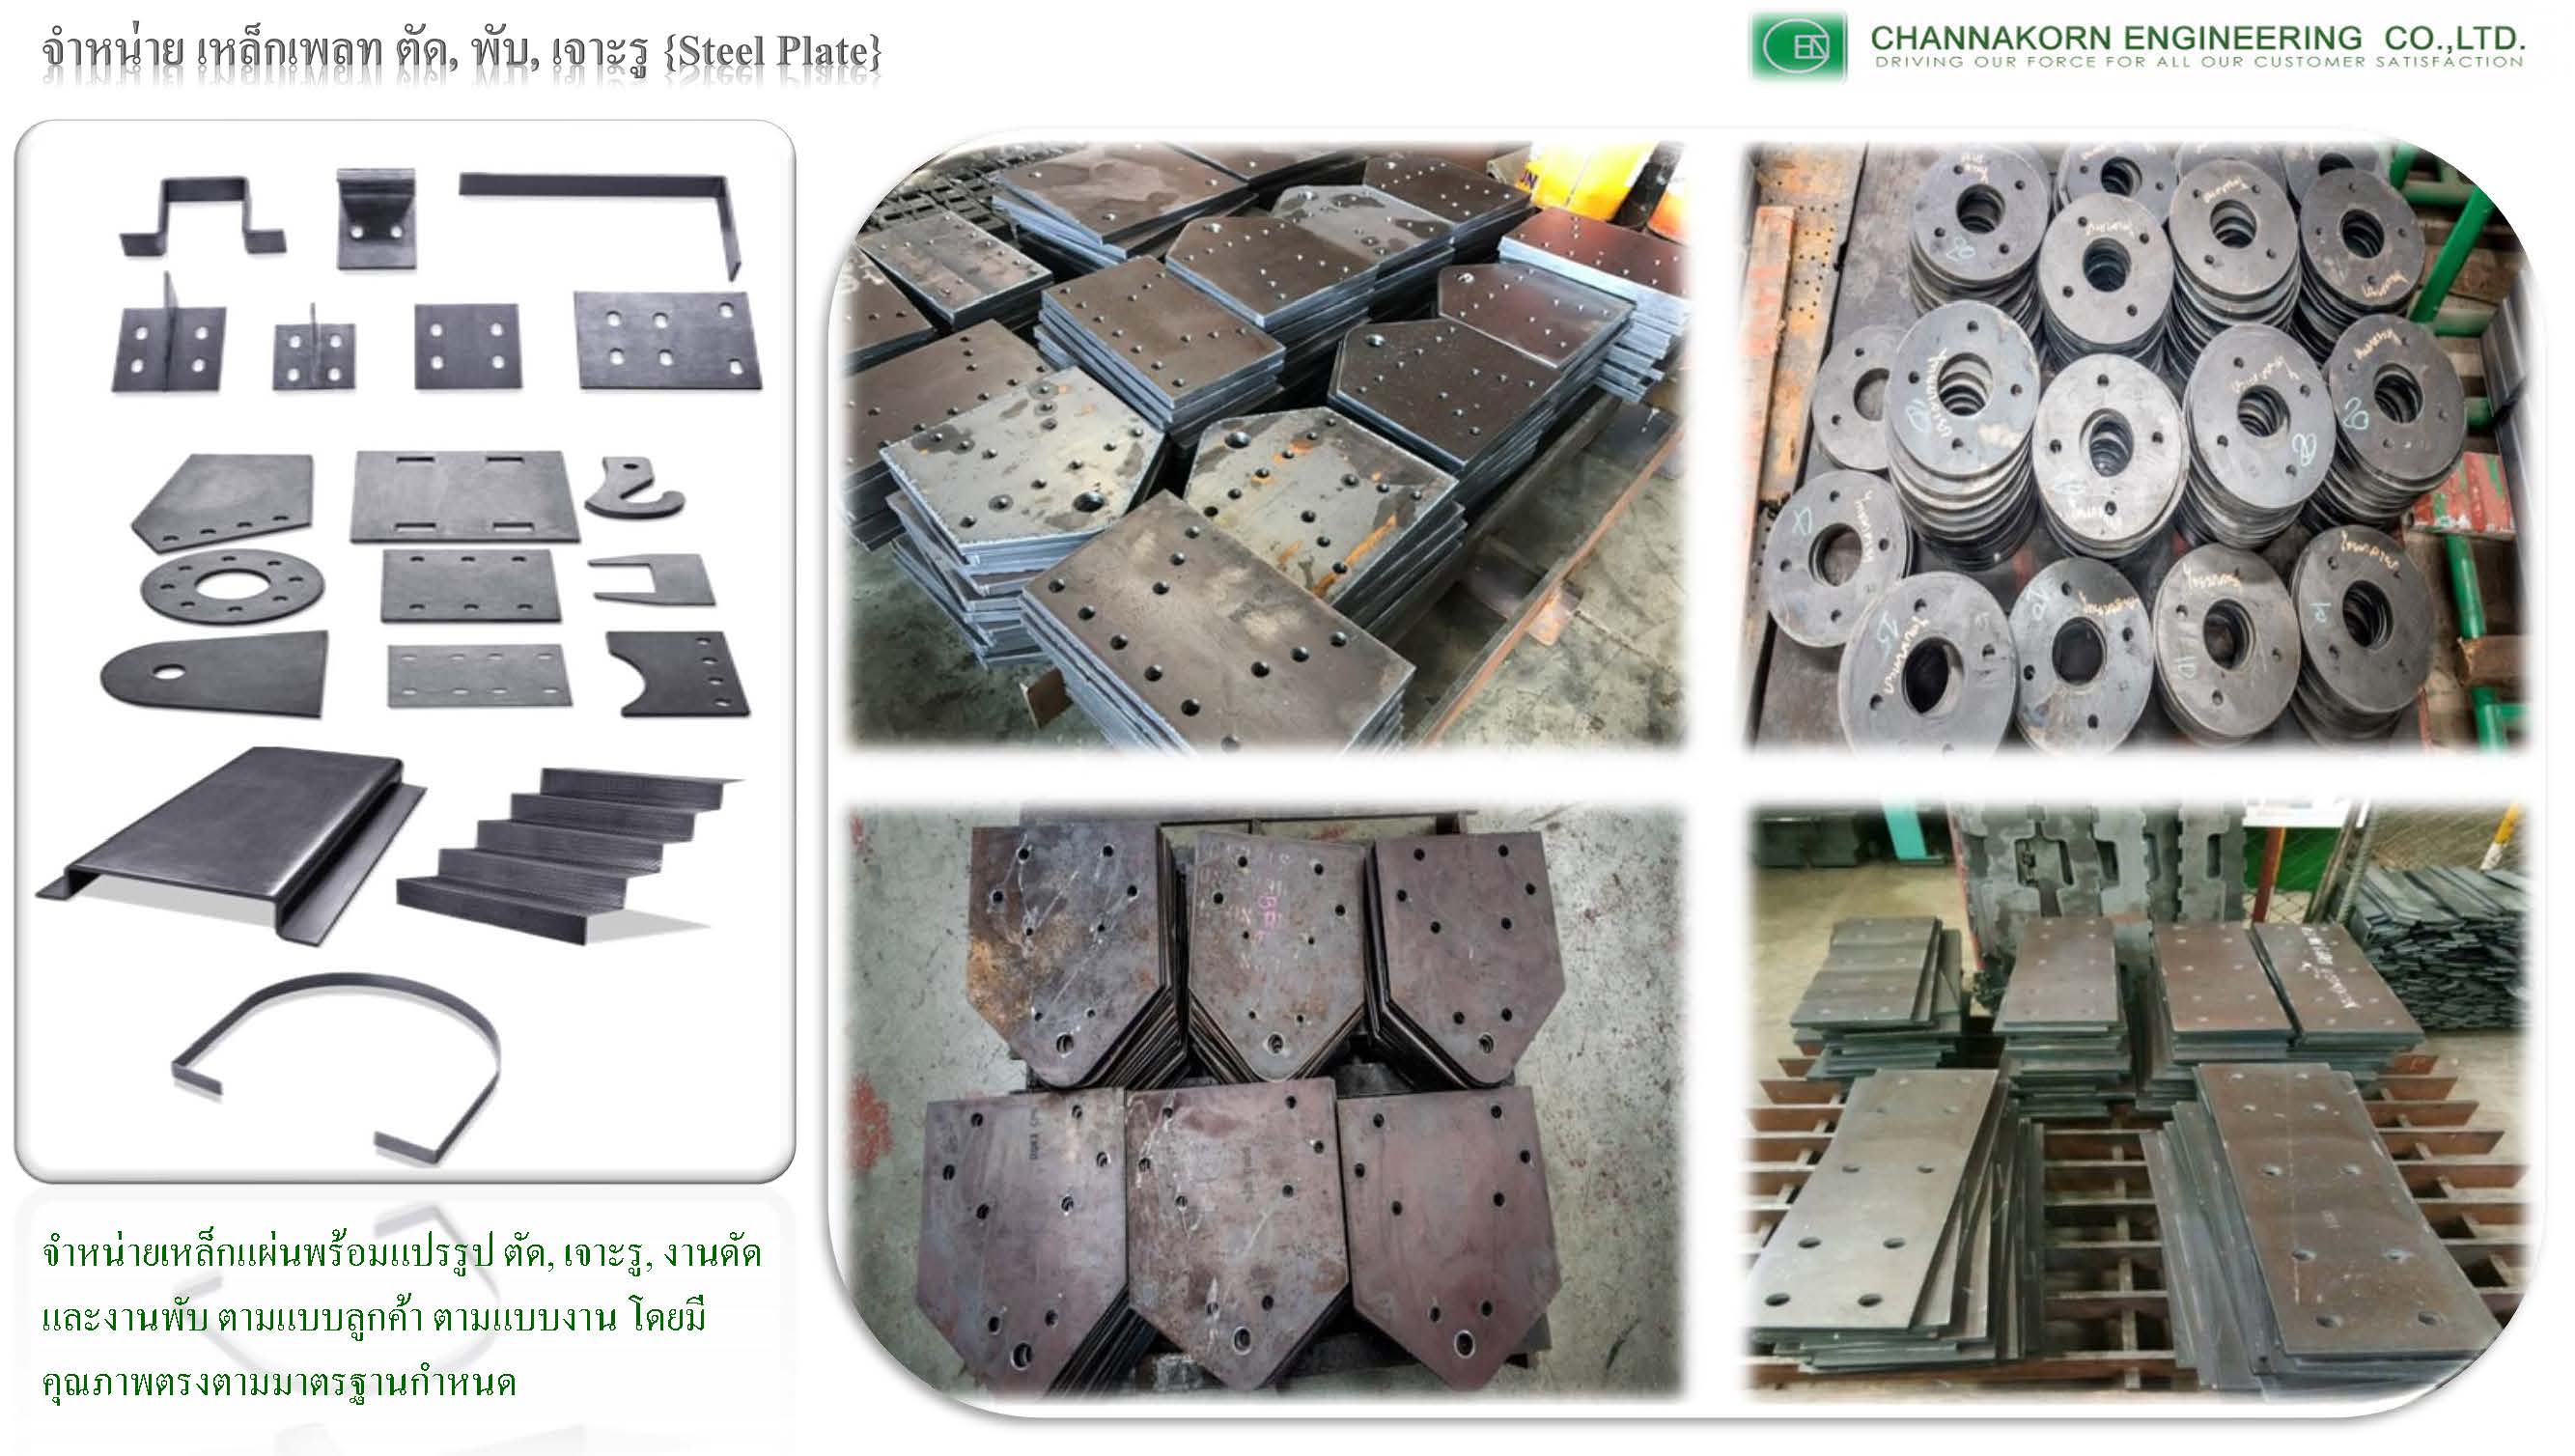 Steel Plate - Channakorn Engineering Co.,Ltd.